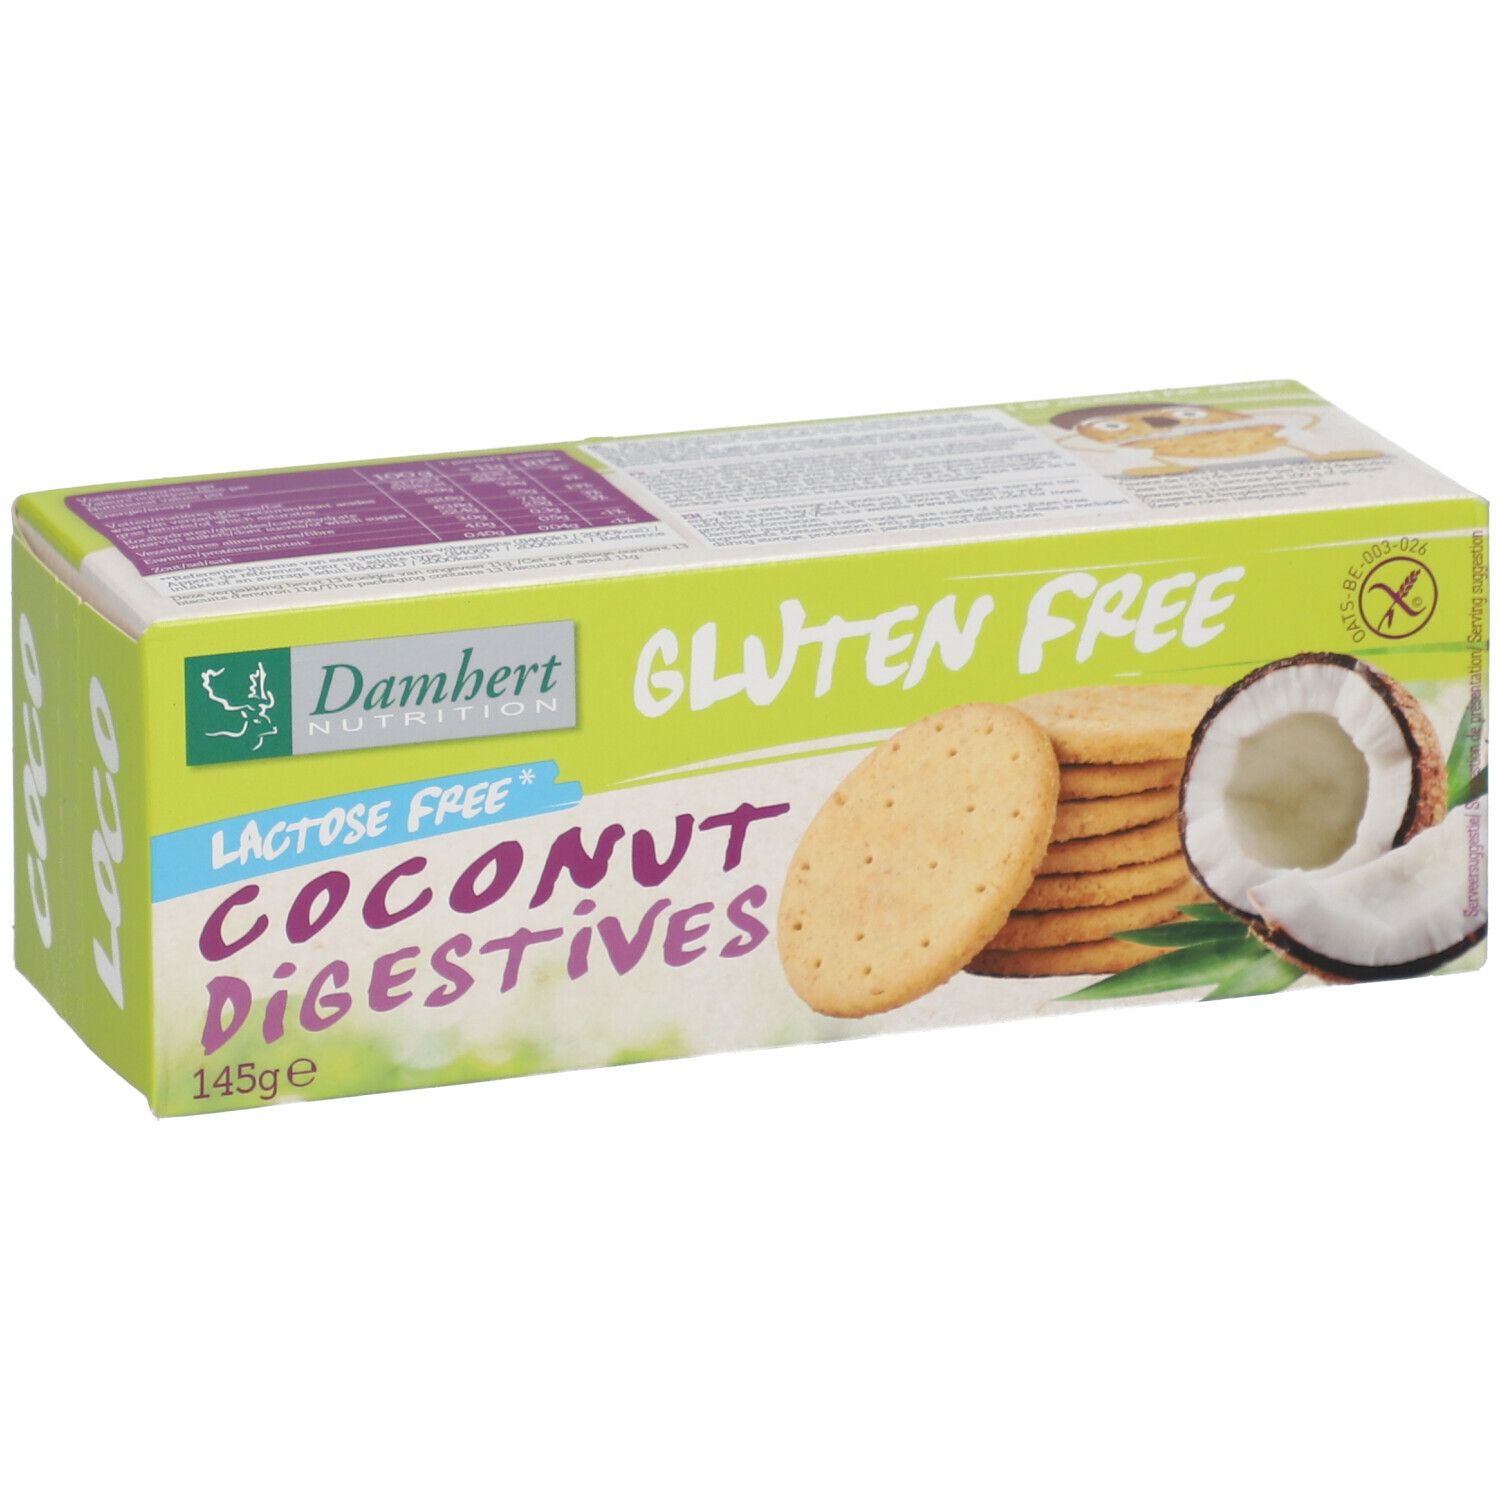 Damhert Gluten Free Coconut digestive cookies Lactose Free